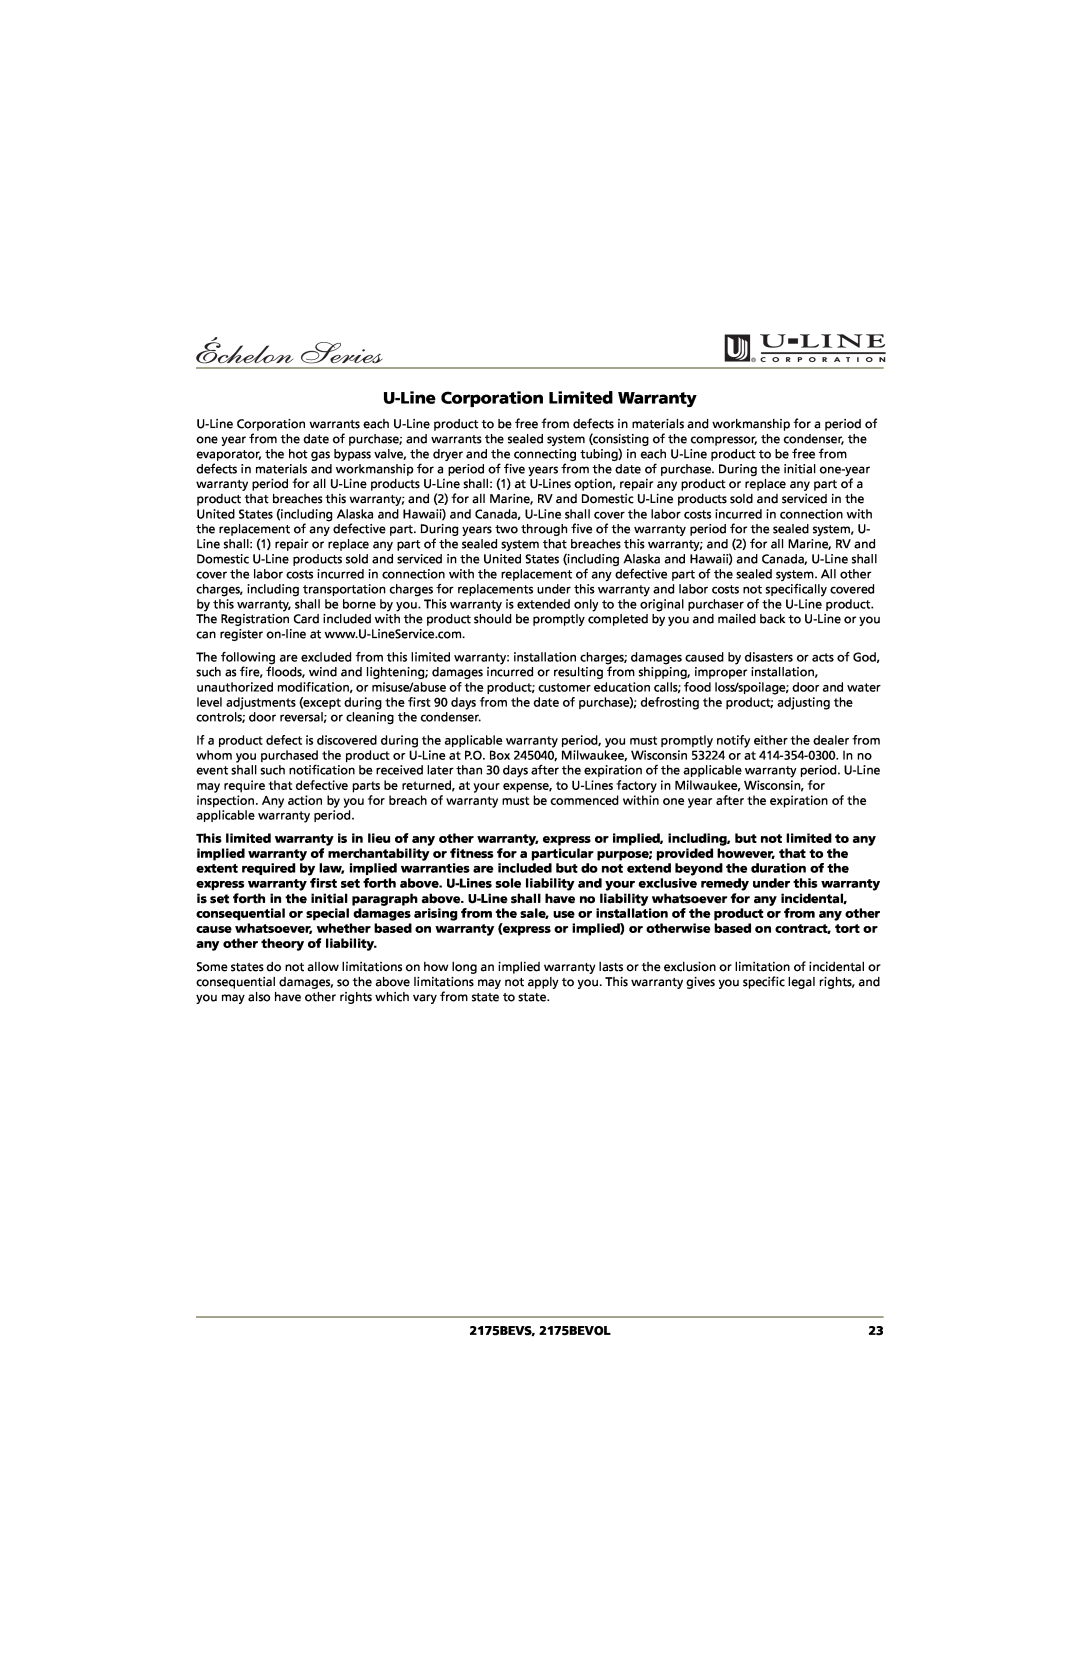 U-Line manual U-LineCorporation Limited Warranty, 2175BEVS, 2175BEVOL 